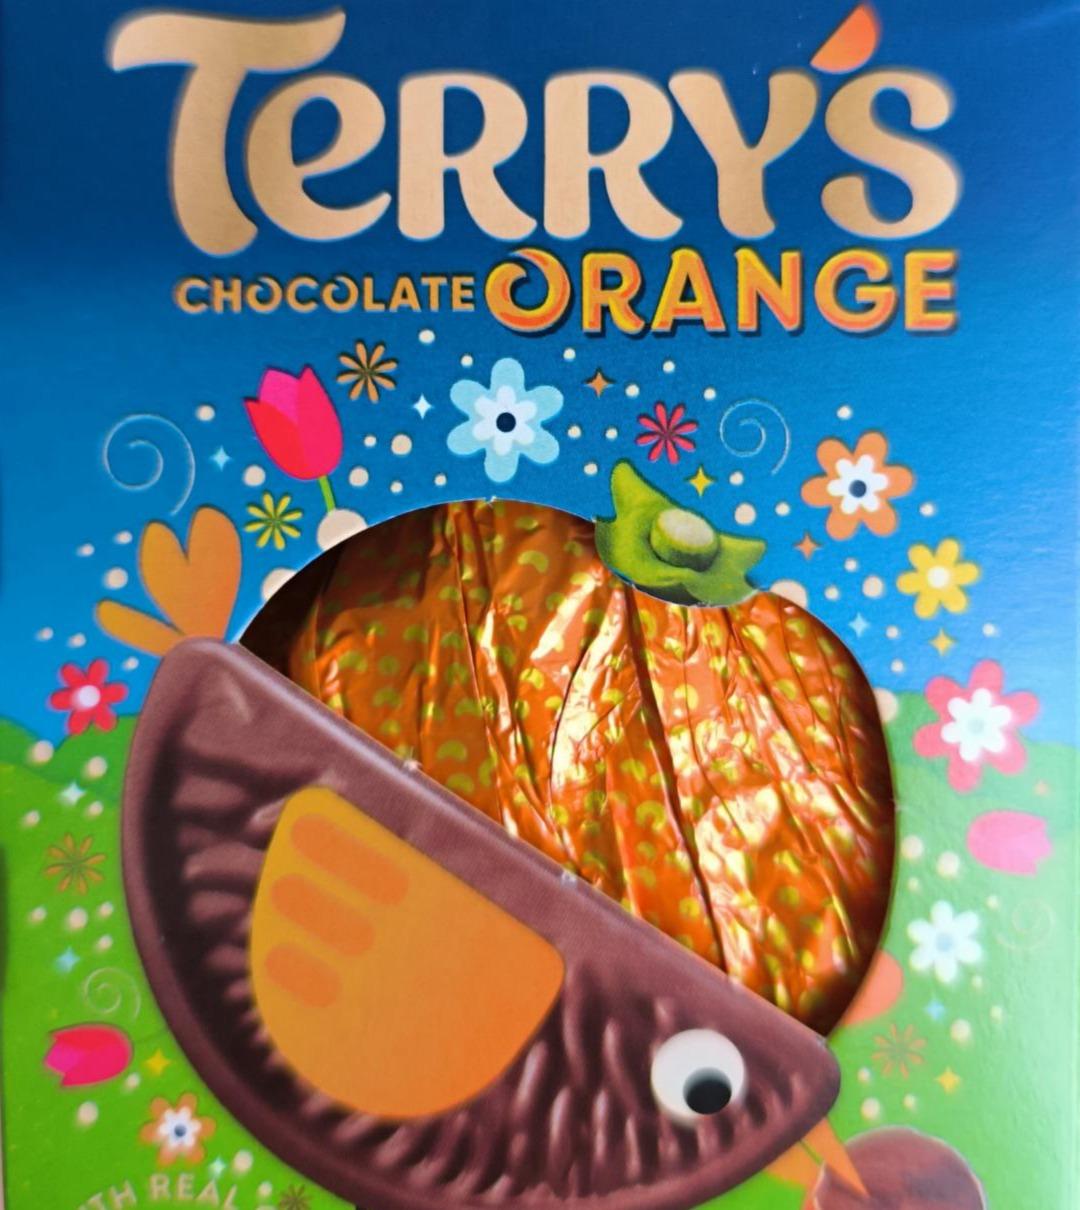 Fotografie - Chocolate orange Terry's